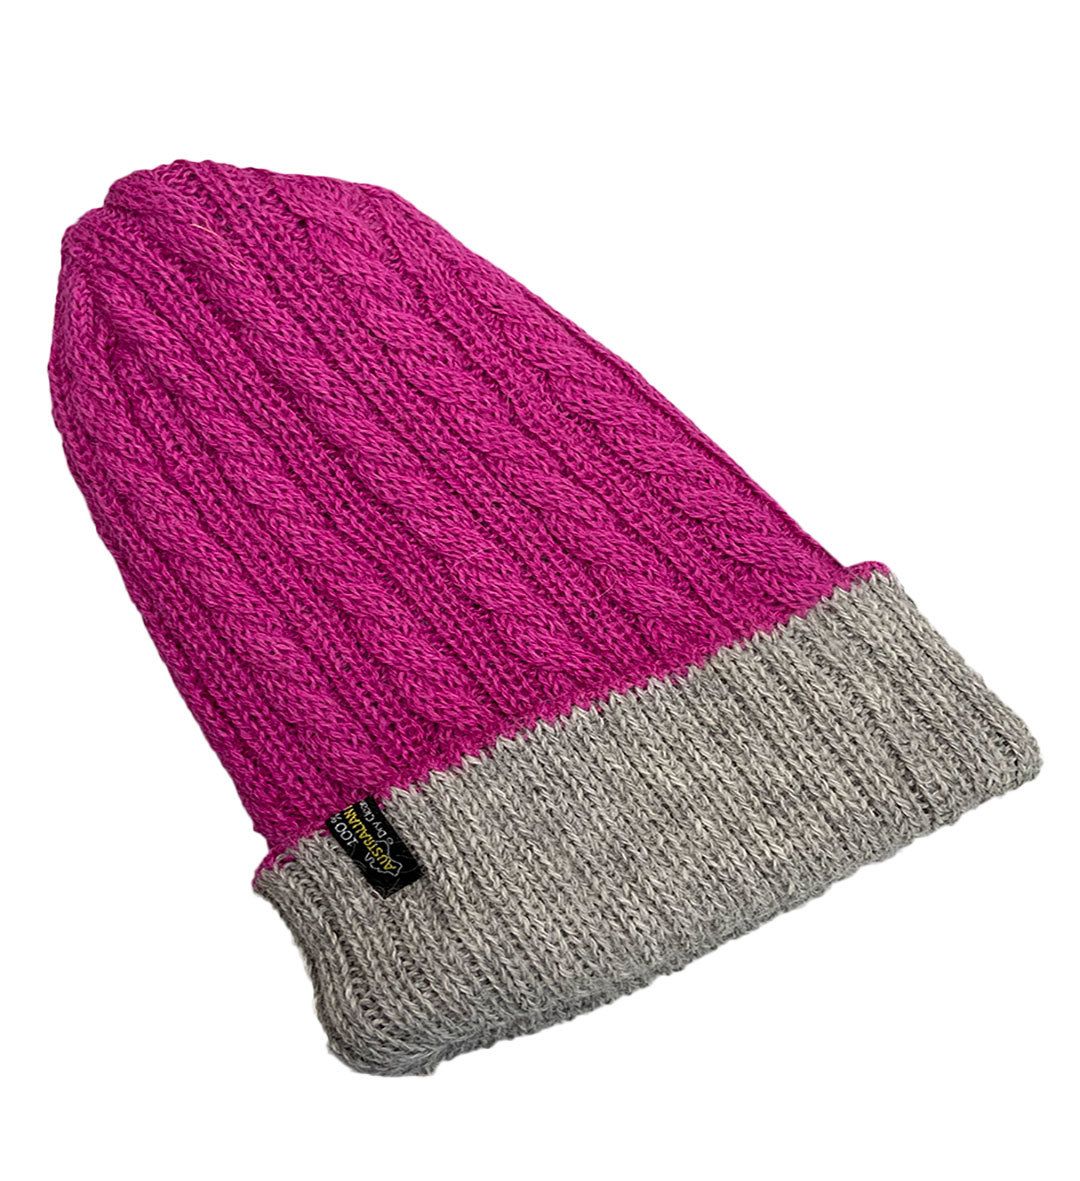 Reversible Hand Knit Alpaca Beanie - Pink/Silver - 2